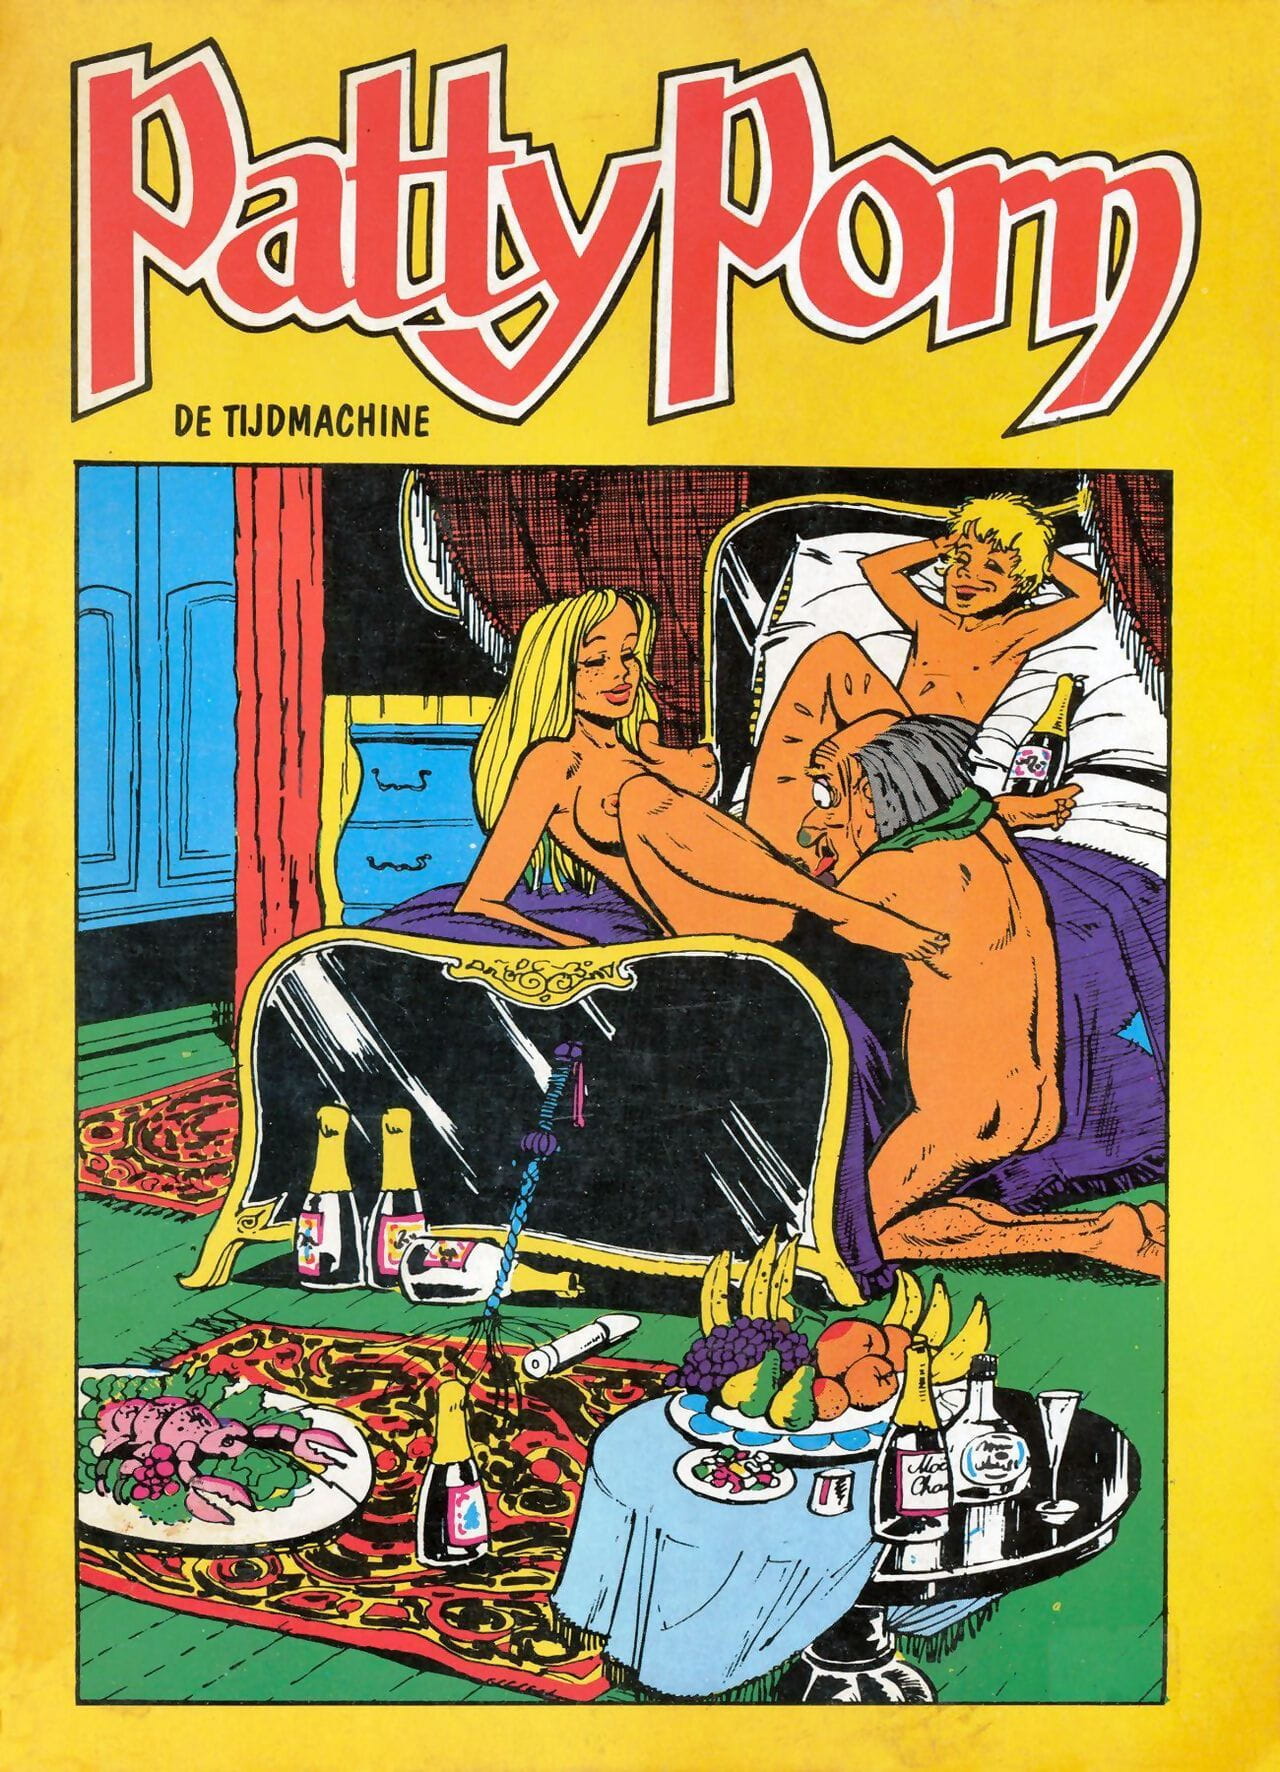 Patty Porn en de tijdmachine page 1